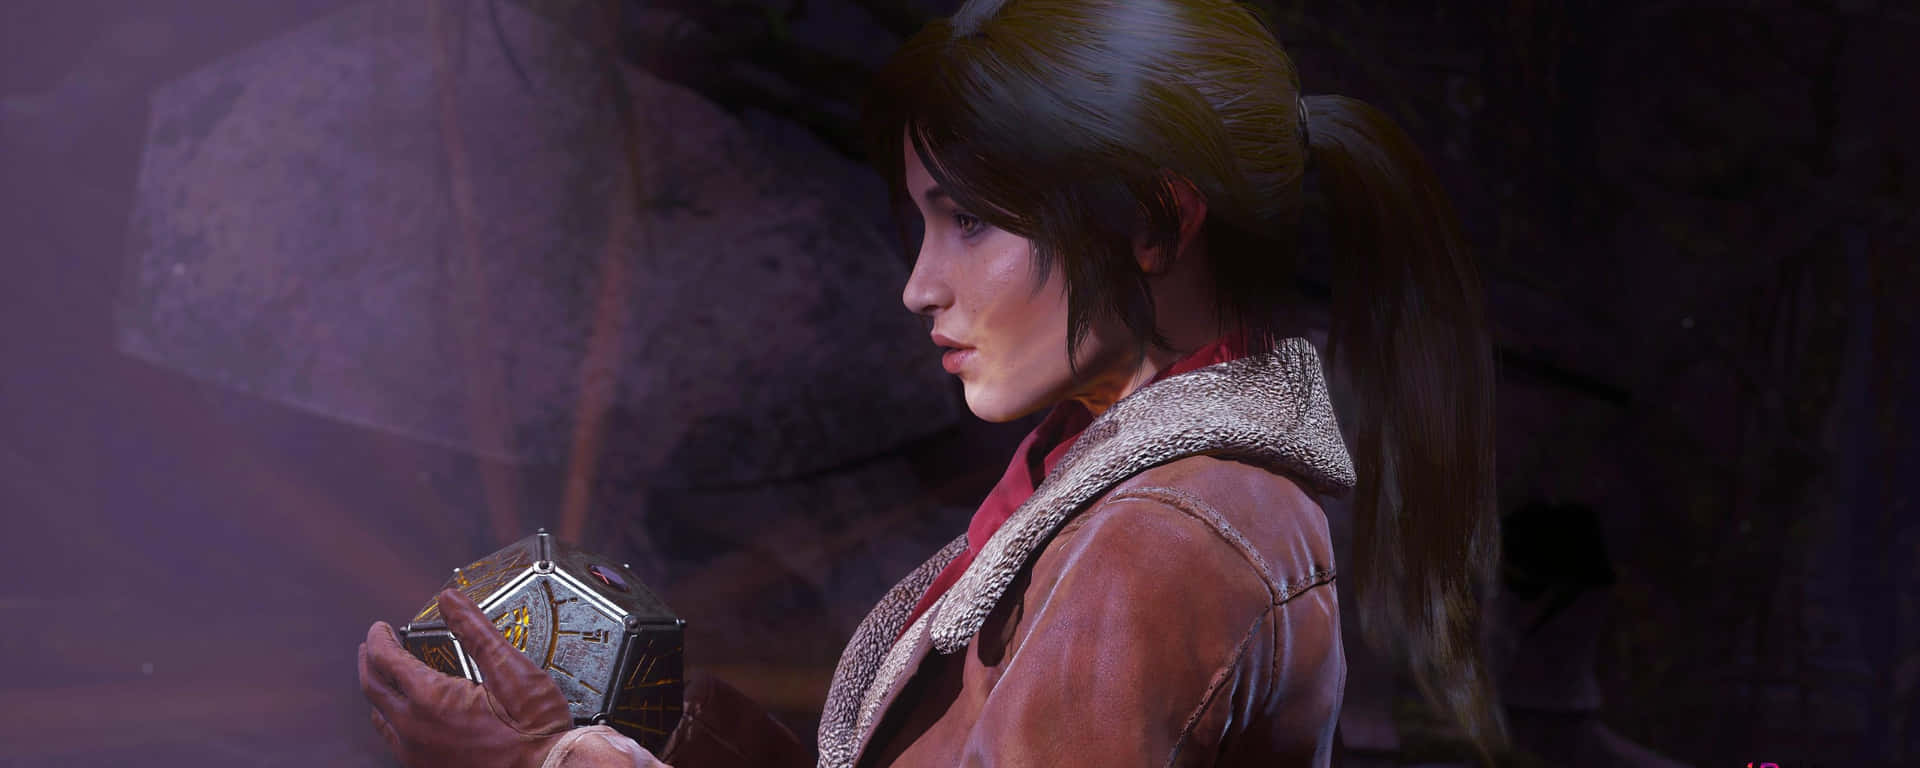 Lara Holder Relik 3440x1440p Opstigning af Tomb Raider Baggrund